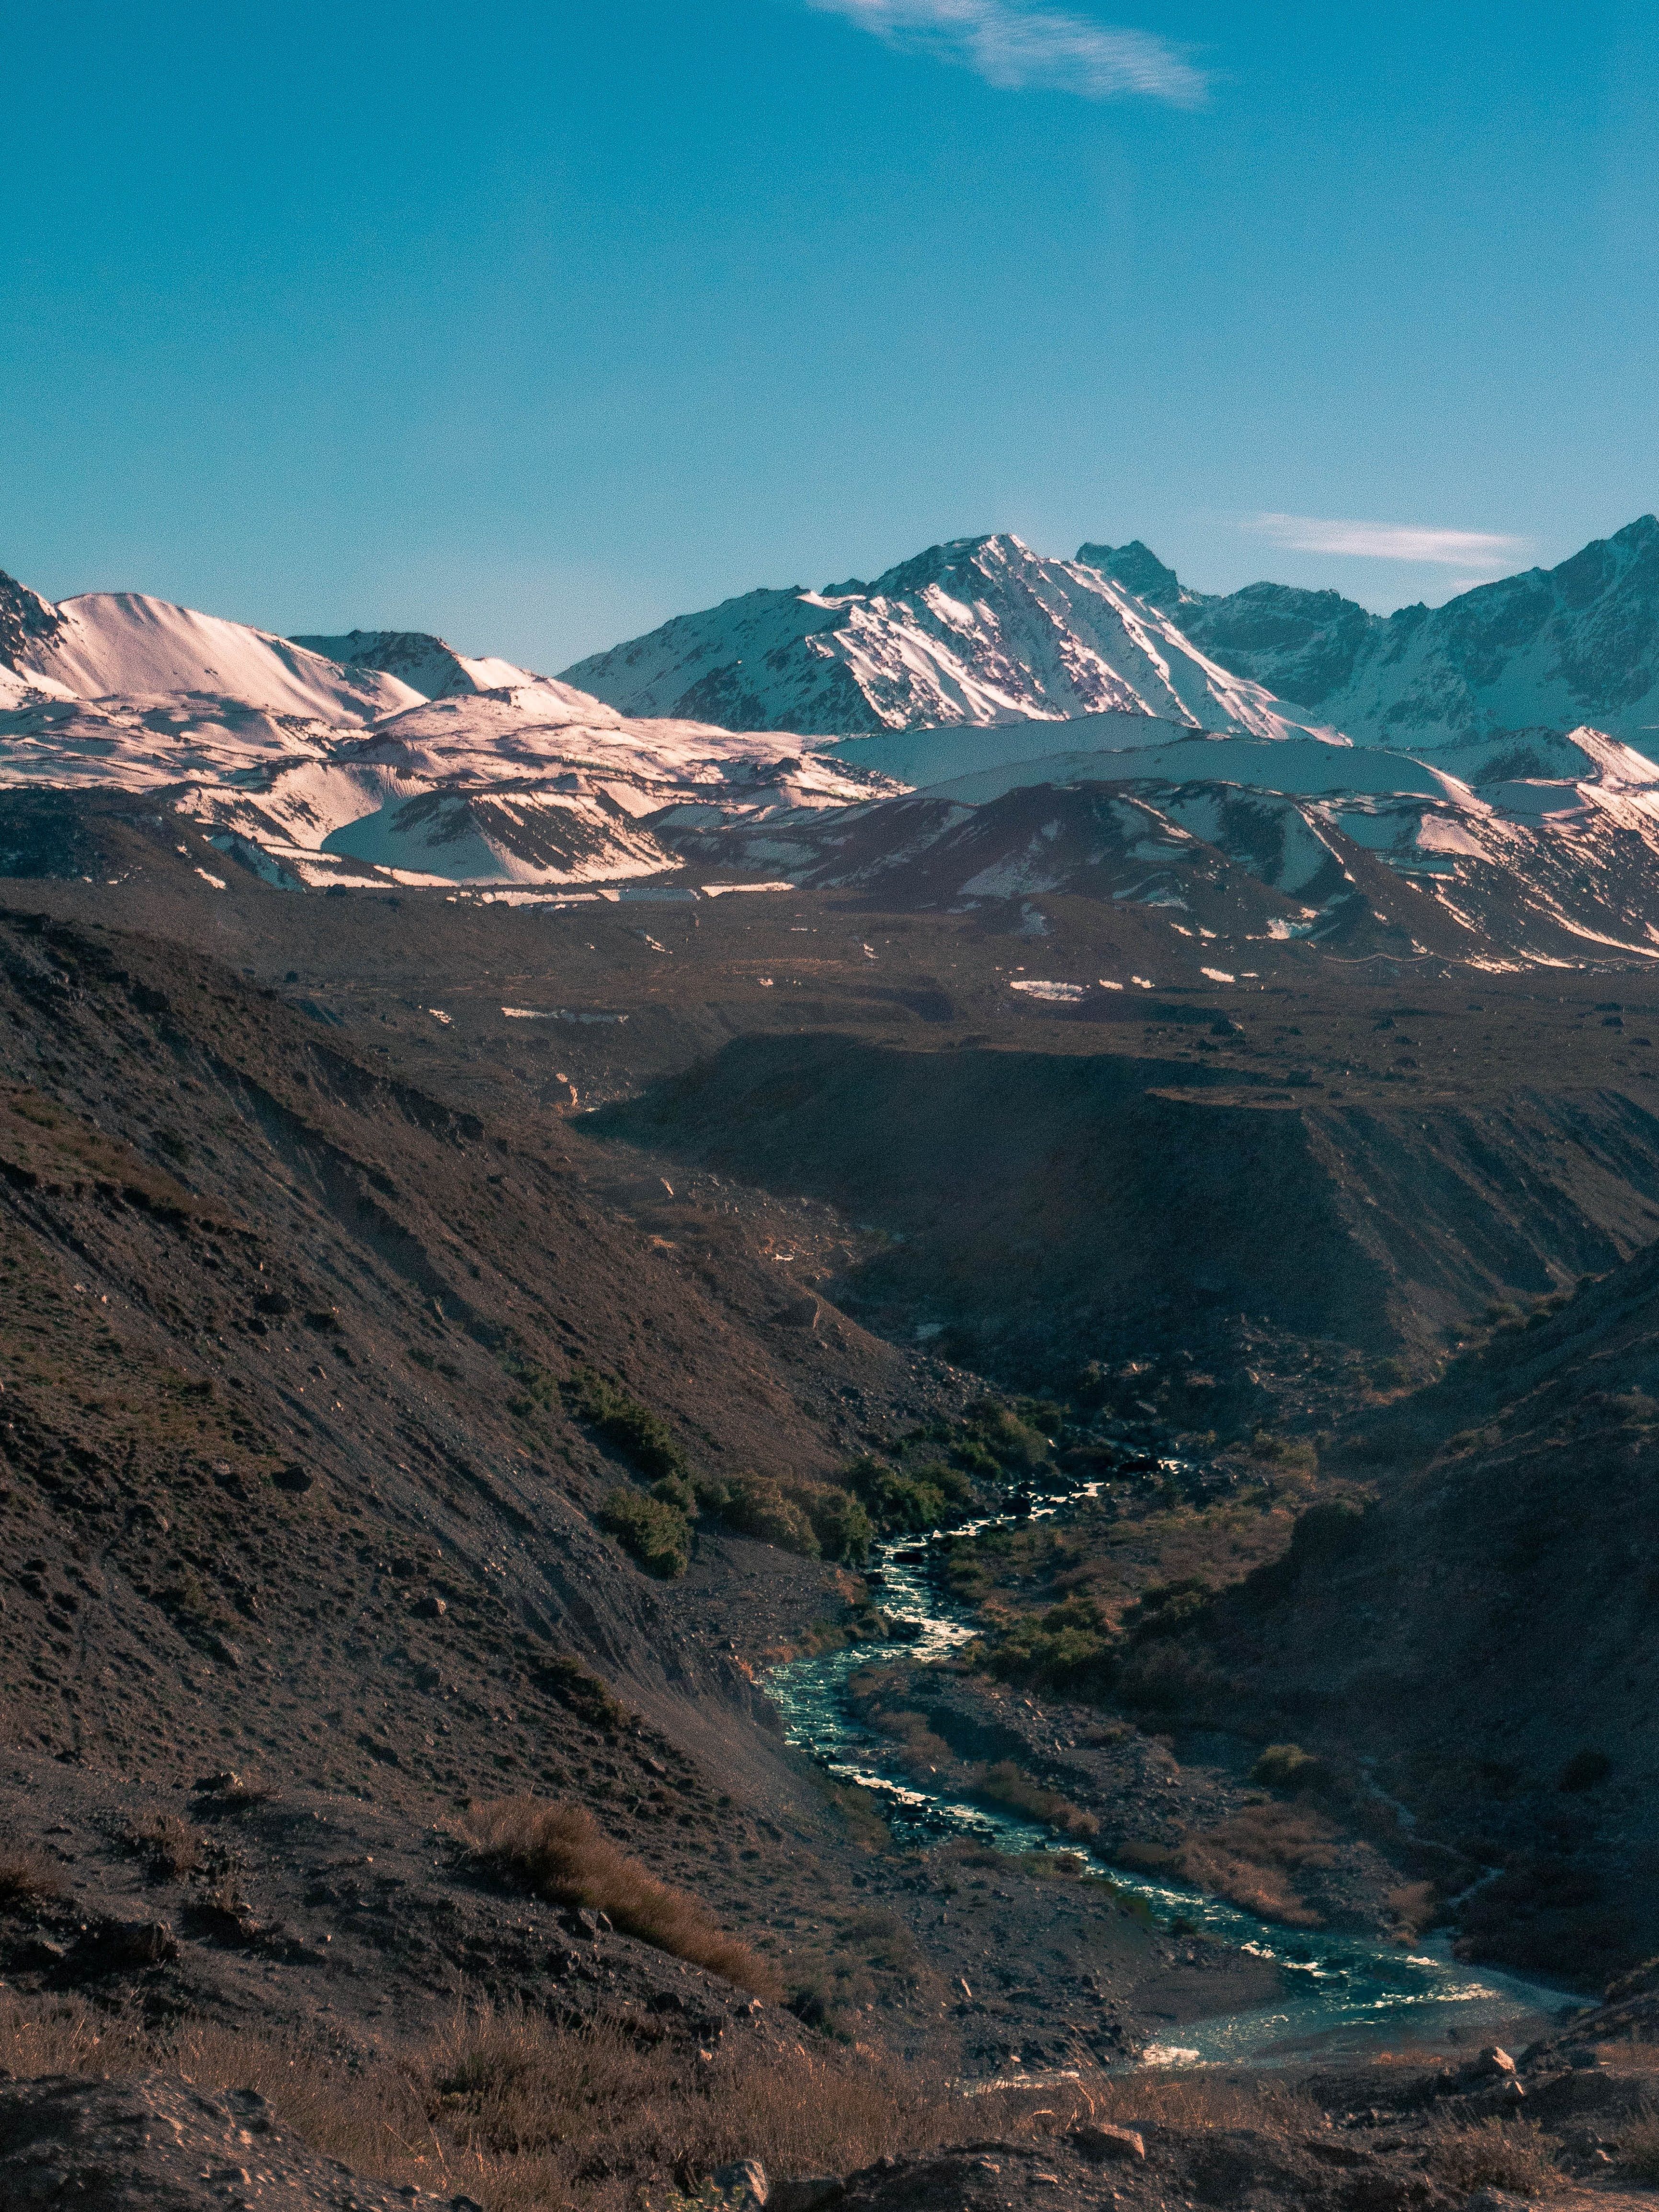 El Cajon de Maipo, mountain peaks, and the Maipo River